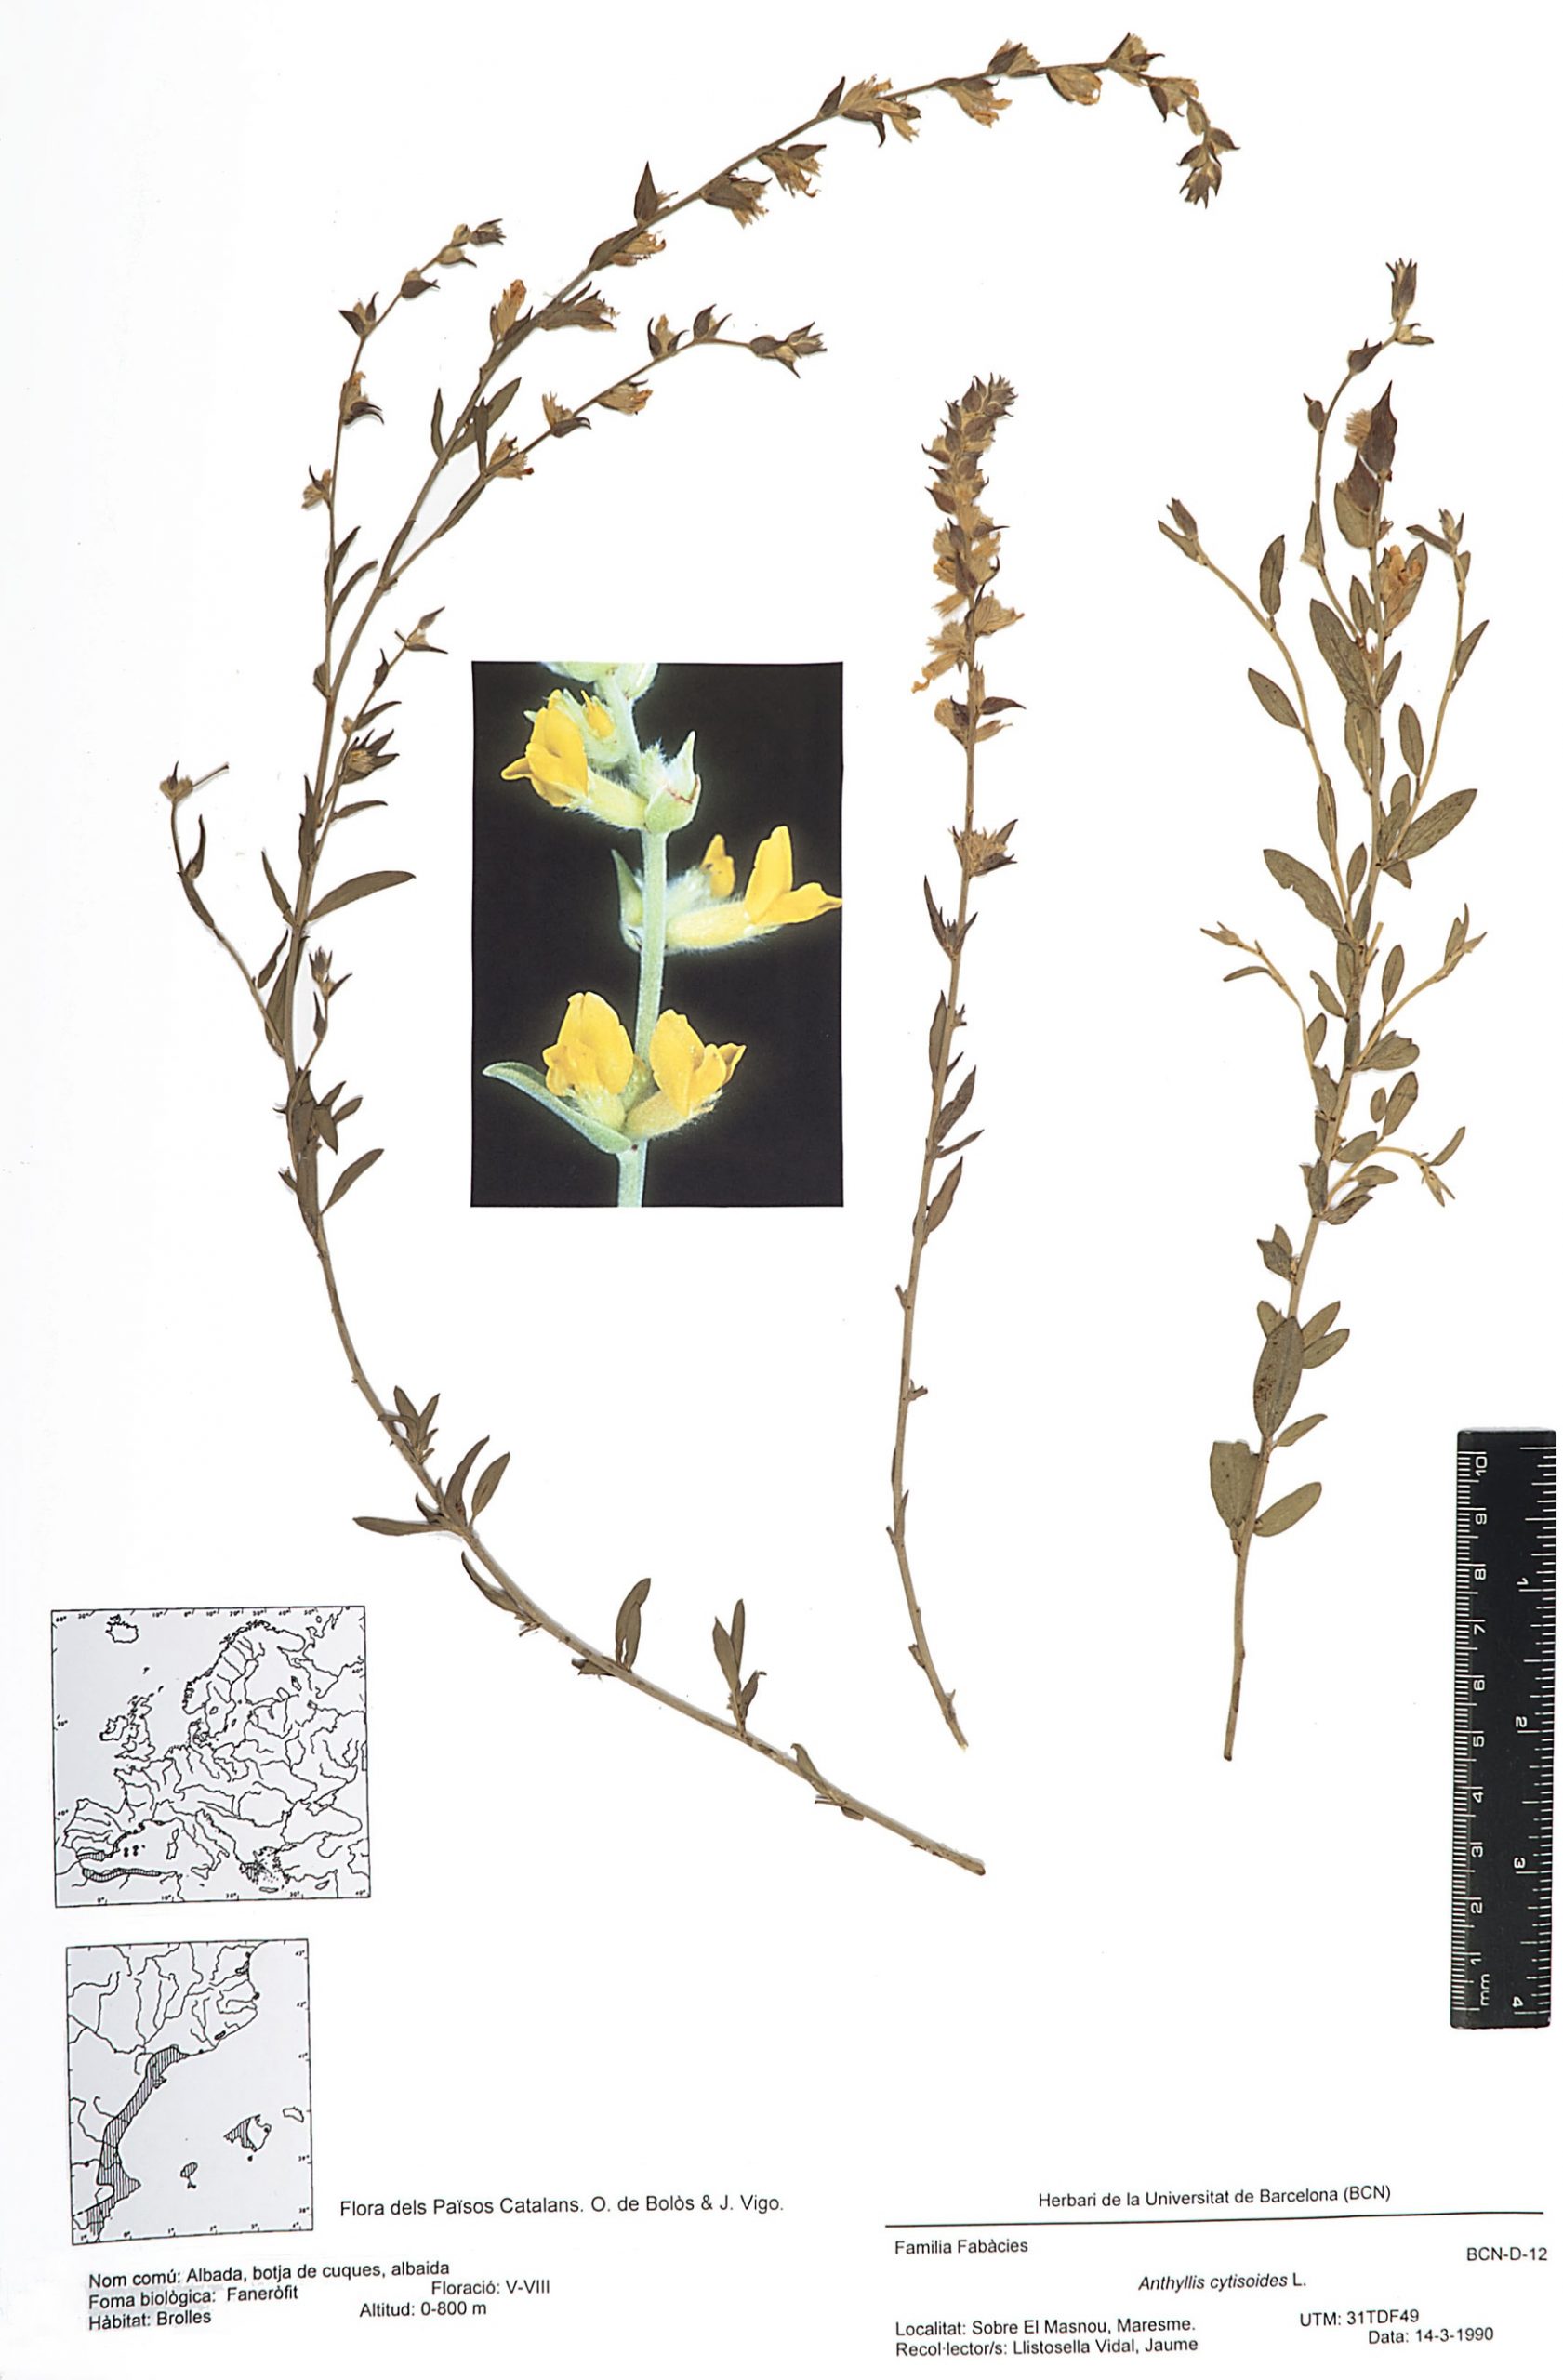 Anthyllis cytisoides L. (Albada, botja de cuques, estepa groga, albaida)